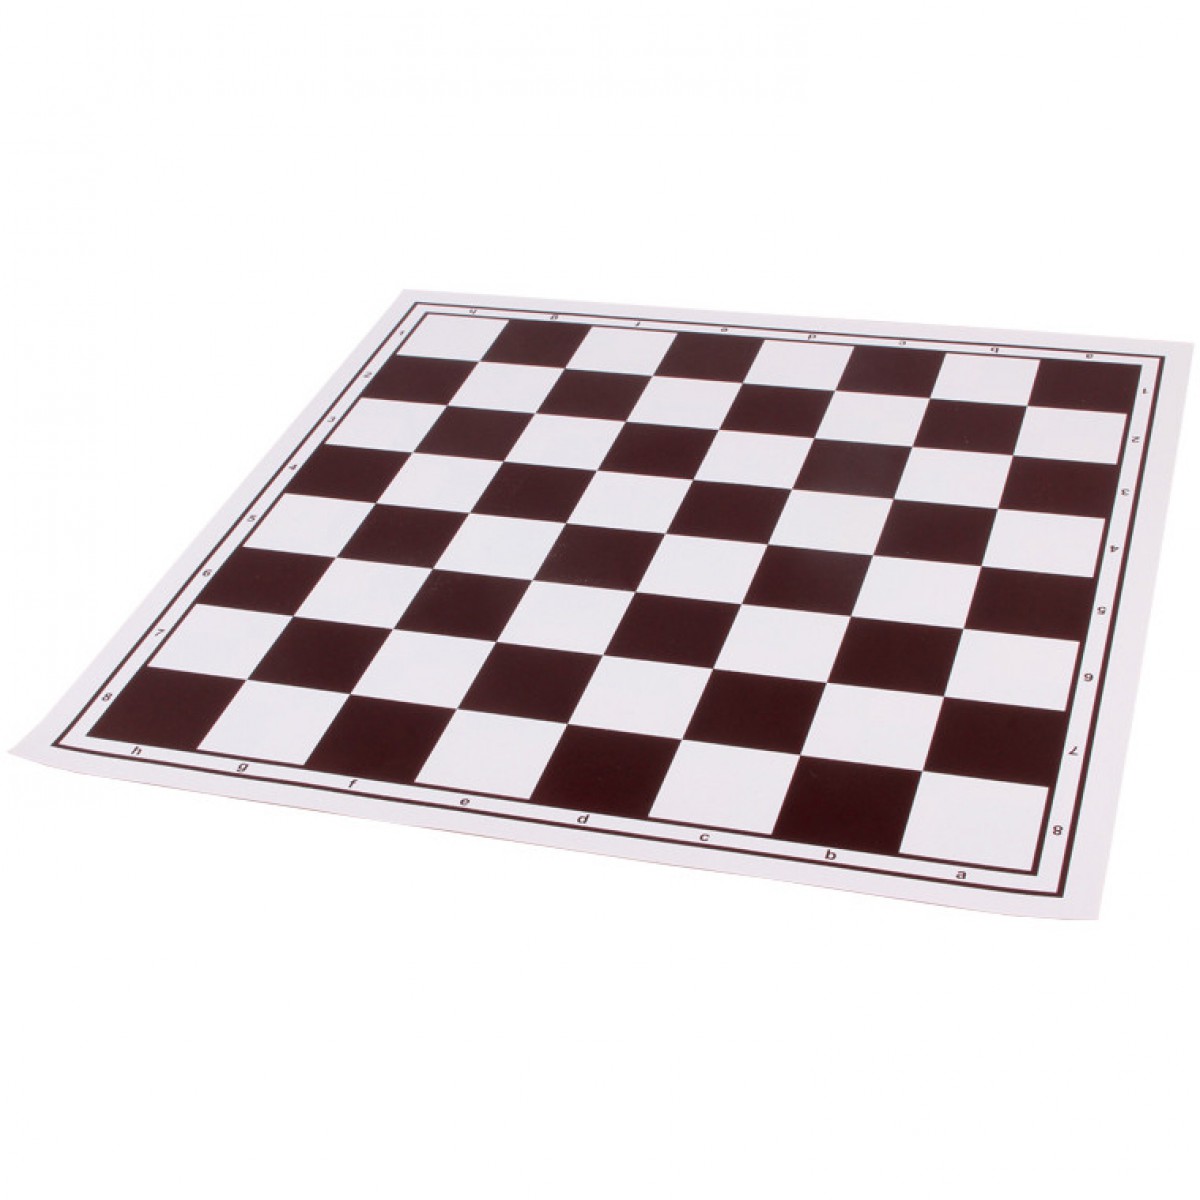 Шахматная доска номера. Шахматная доска виниловая 51х51. Доска шахматная виниловая большая 51 см. Доска шахматная виниловая (средняя) 43 см. Виниловая доска 3х3х шахматы.